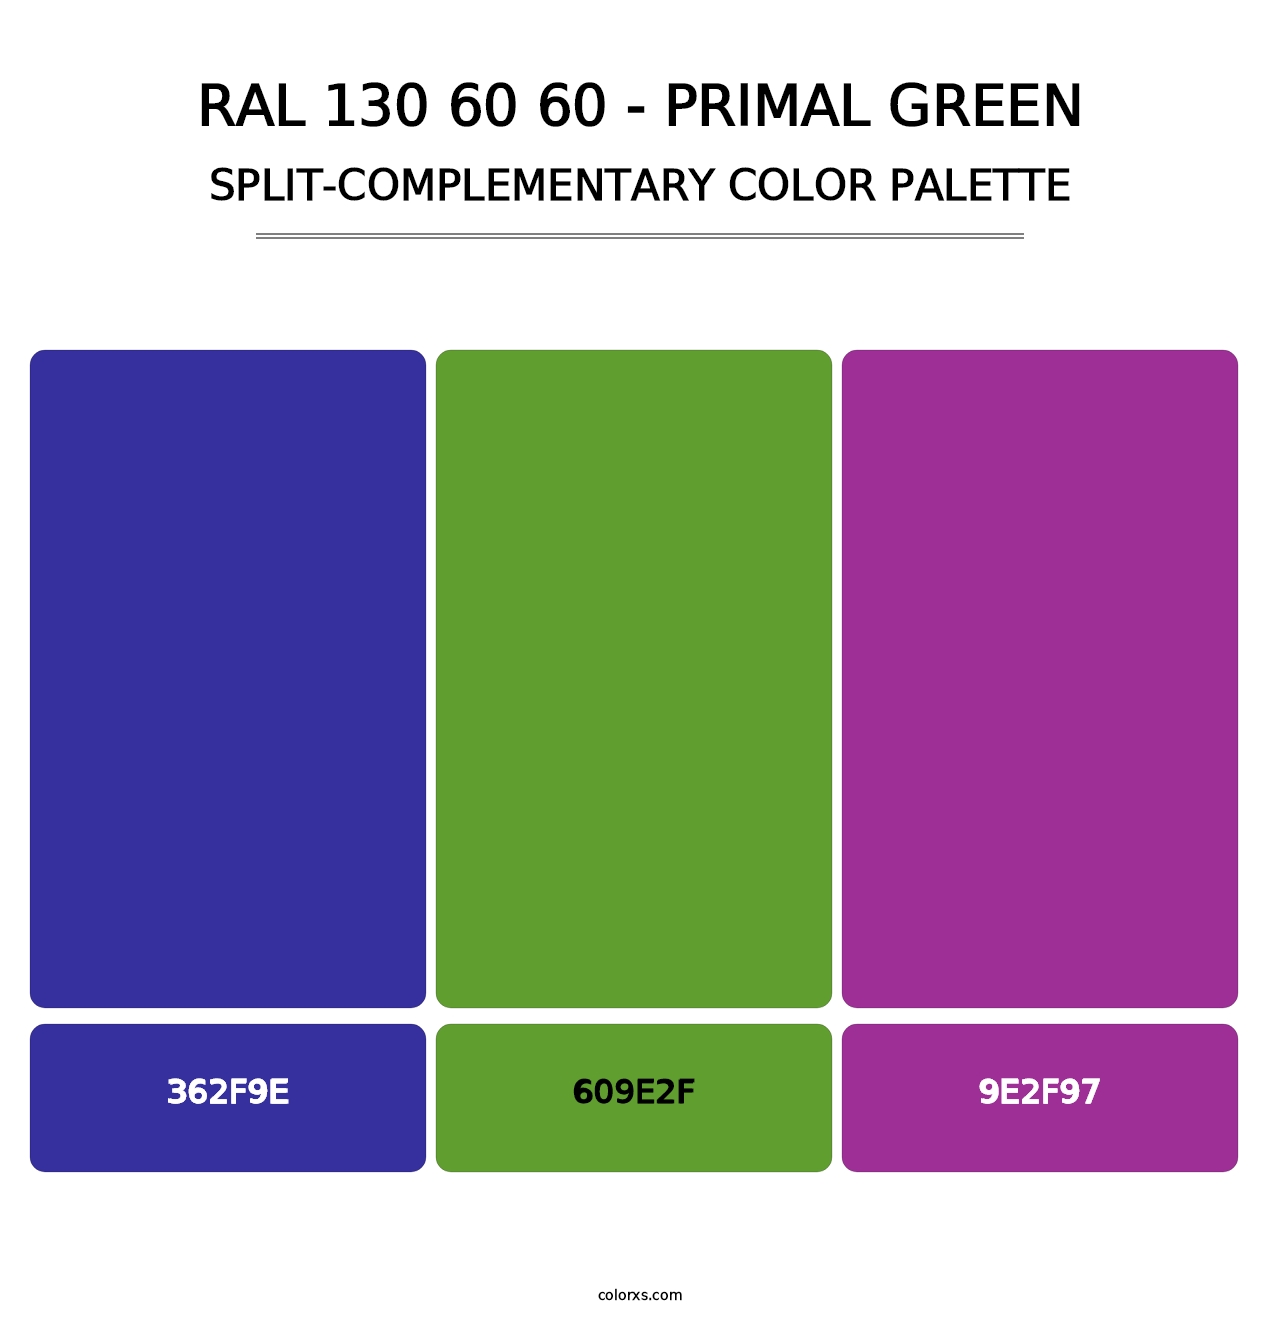 RAL 130 60 60 - Primal Green - Split-Complementary Color Palette